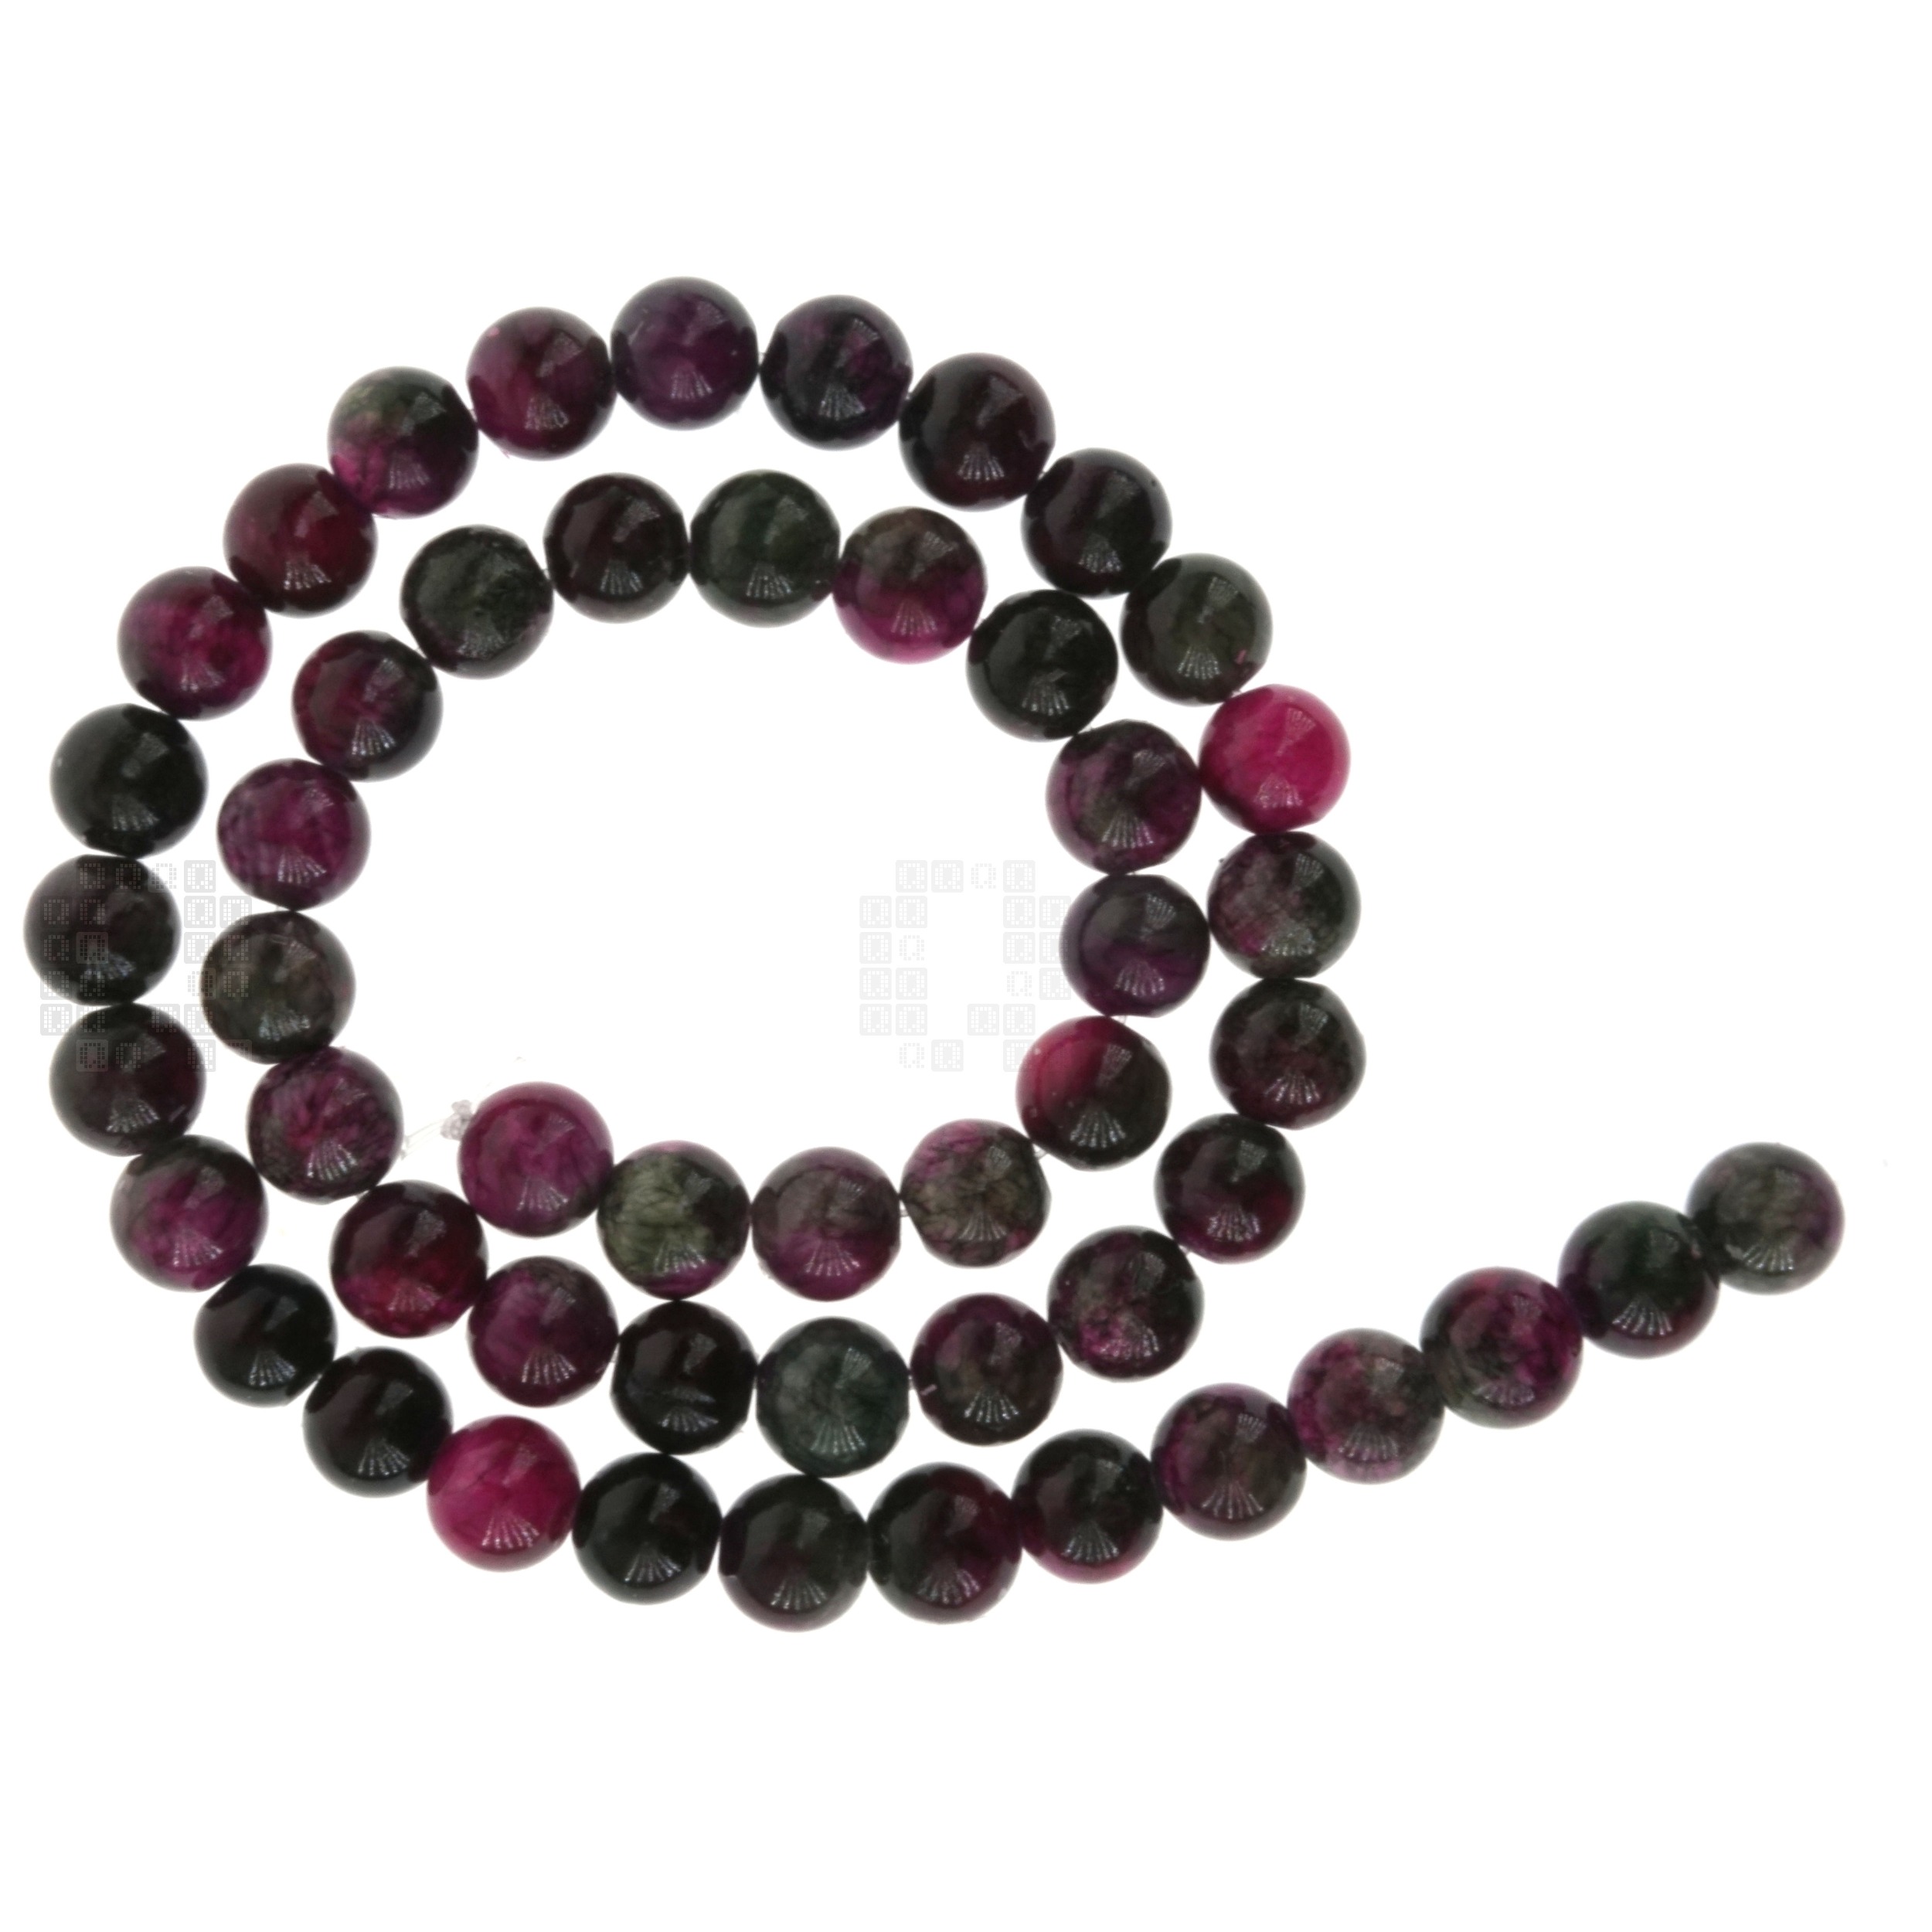 Persian Jade 8mm Round Beads, 45 Pieces